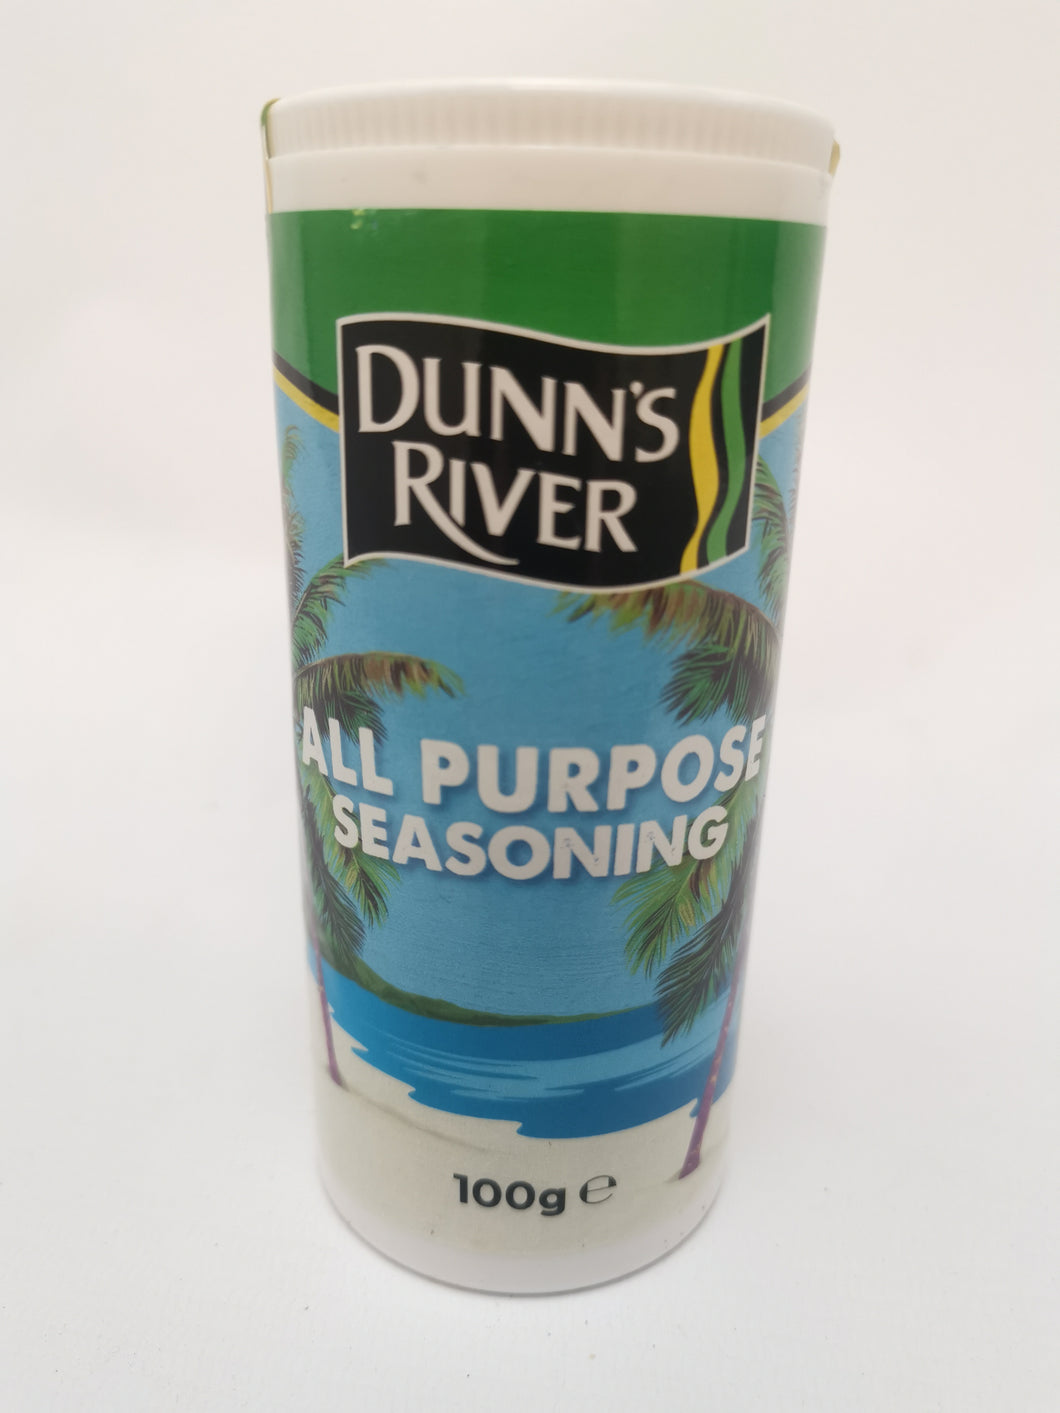 Dunn's River All Purpose Seasoning 100g